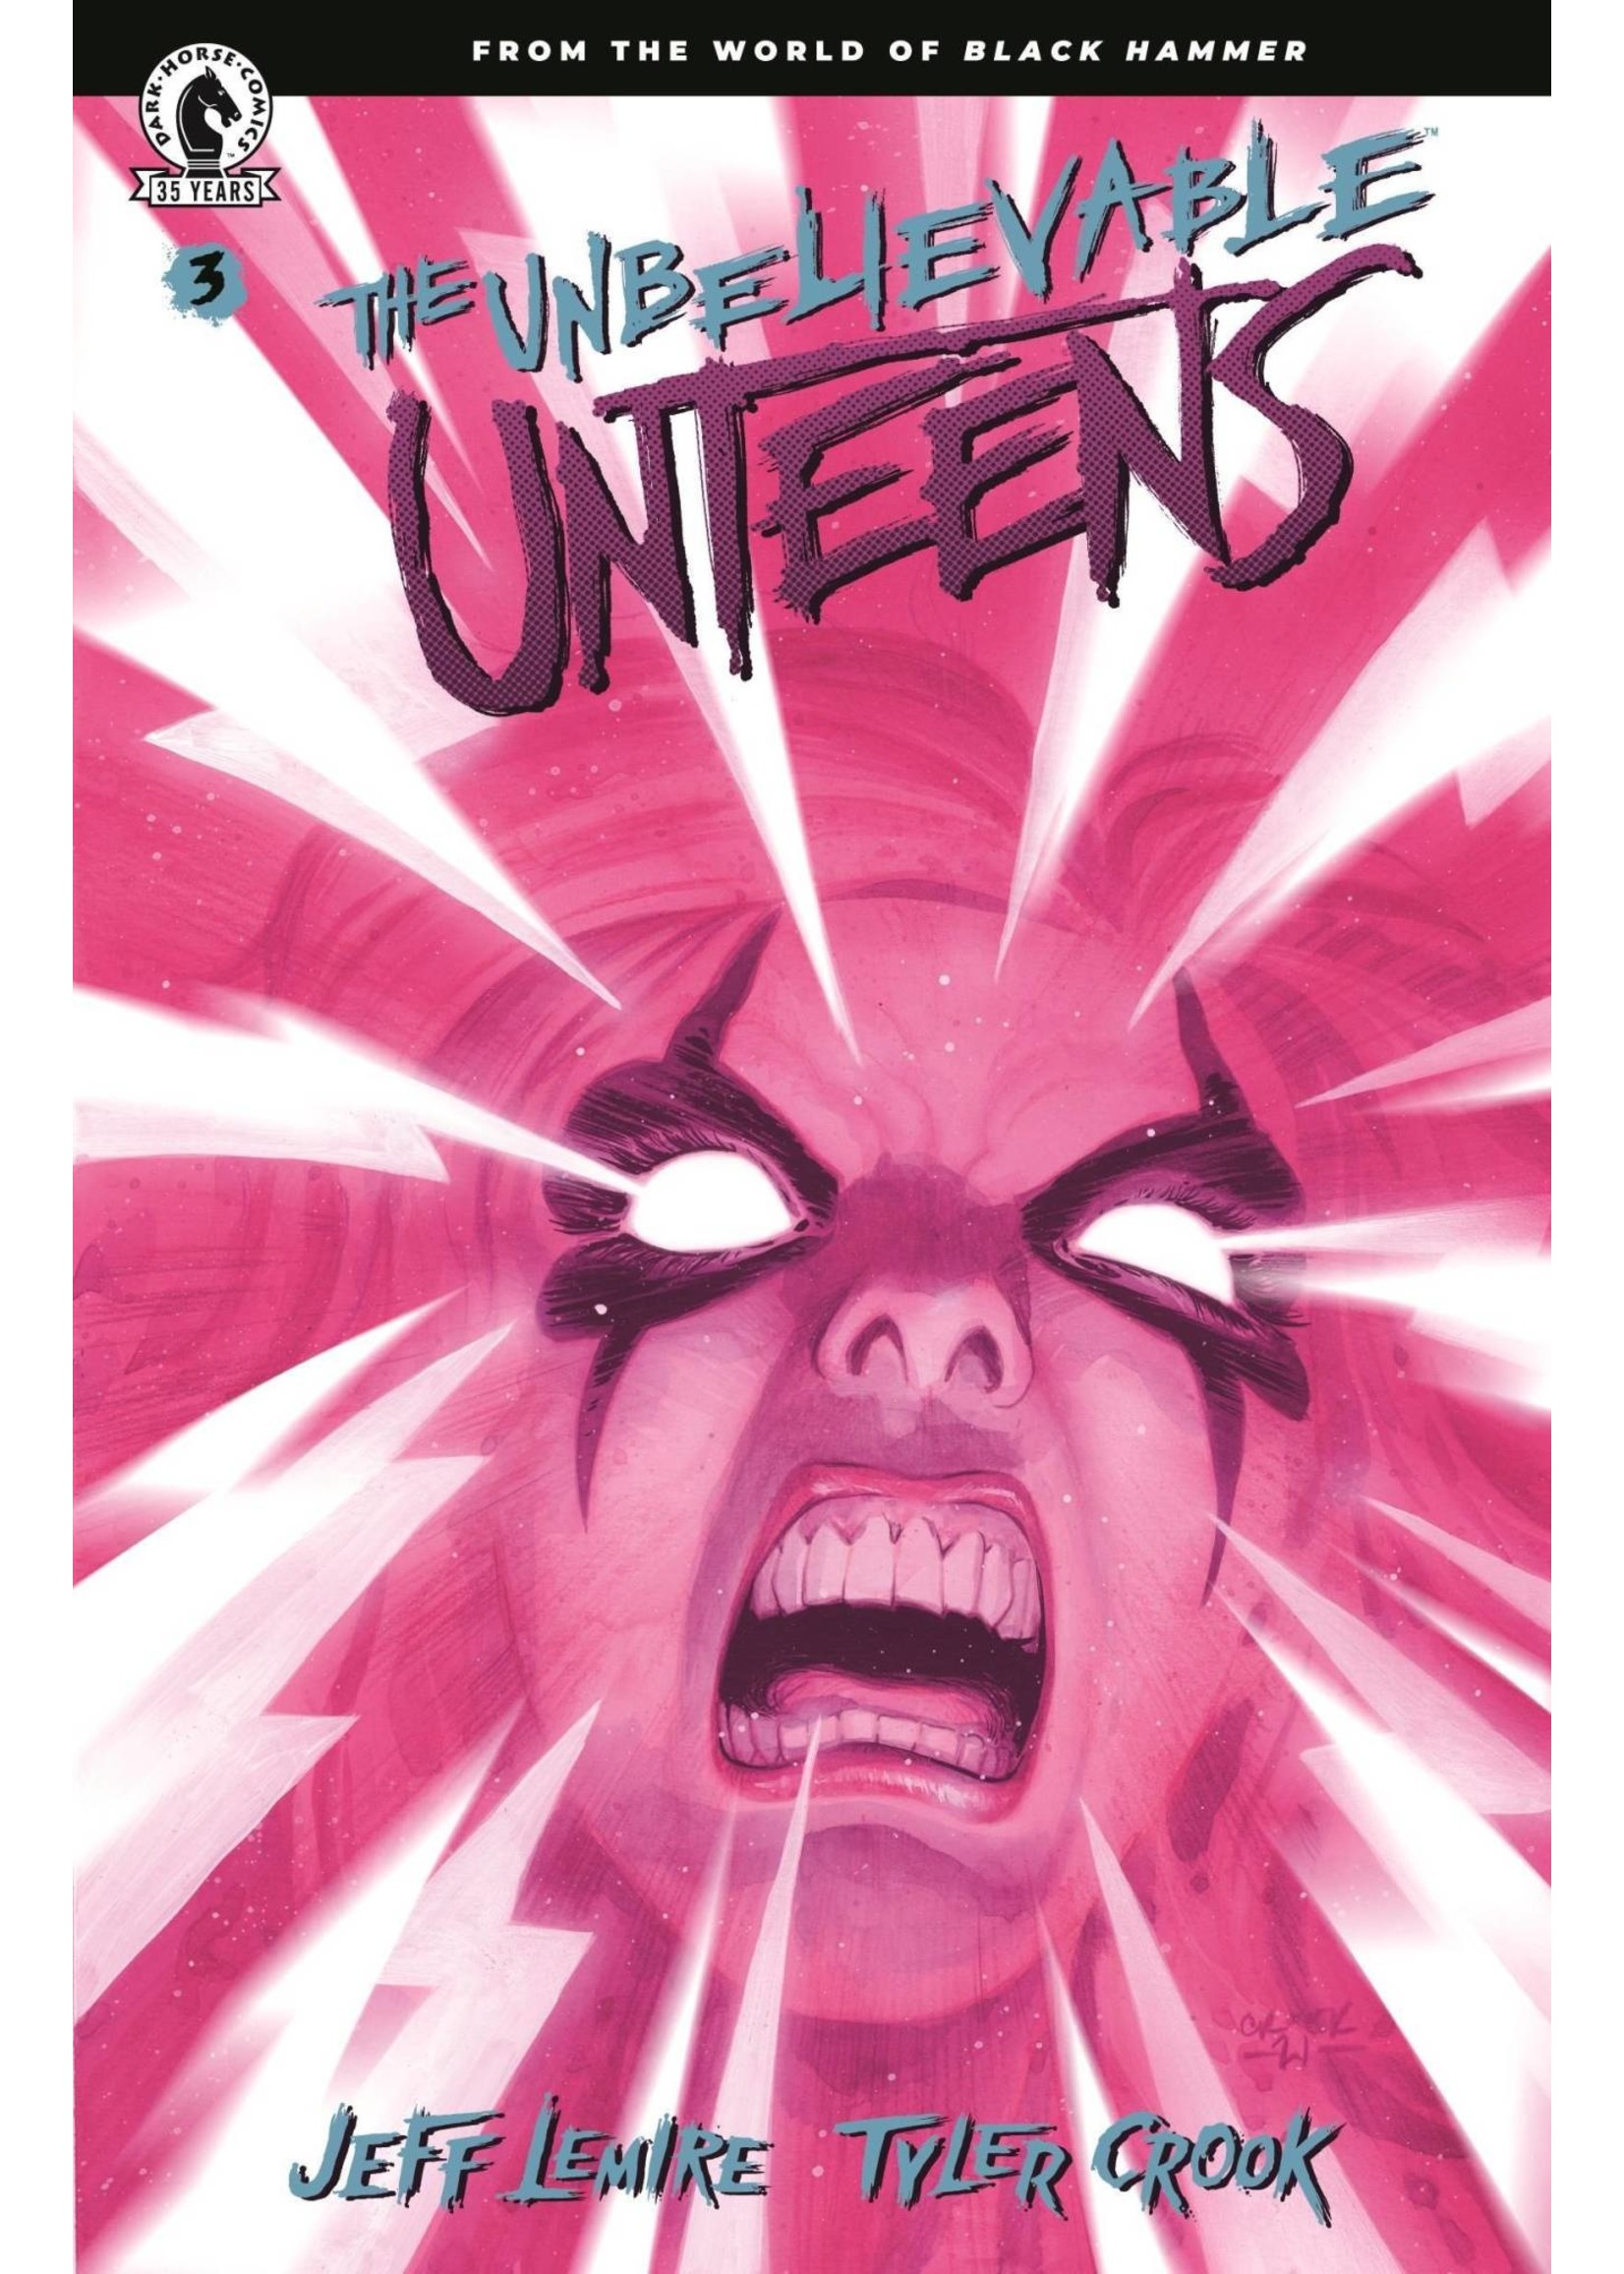 Wonder Woman Unbelieveable Unteens #3